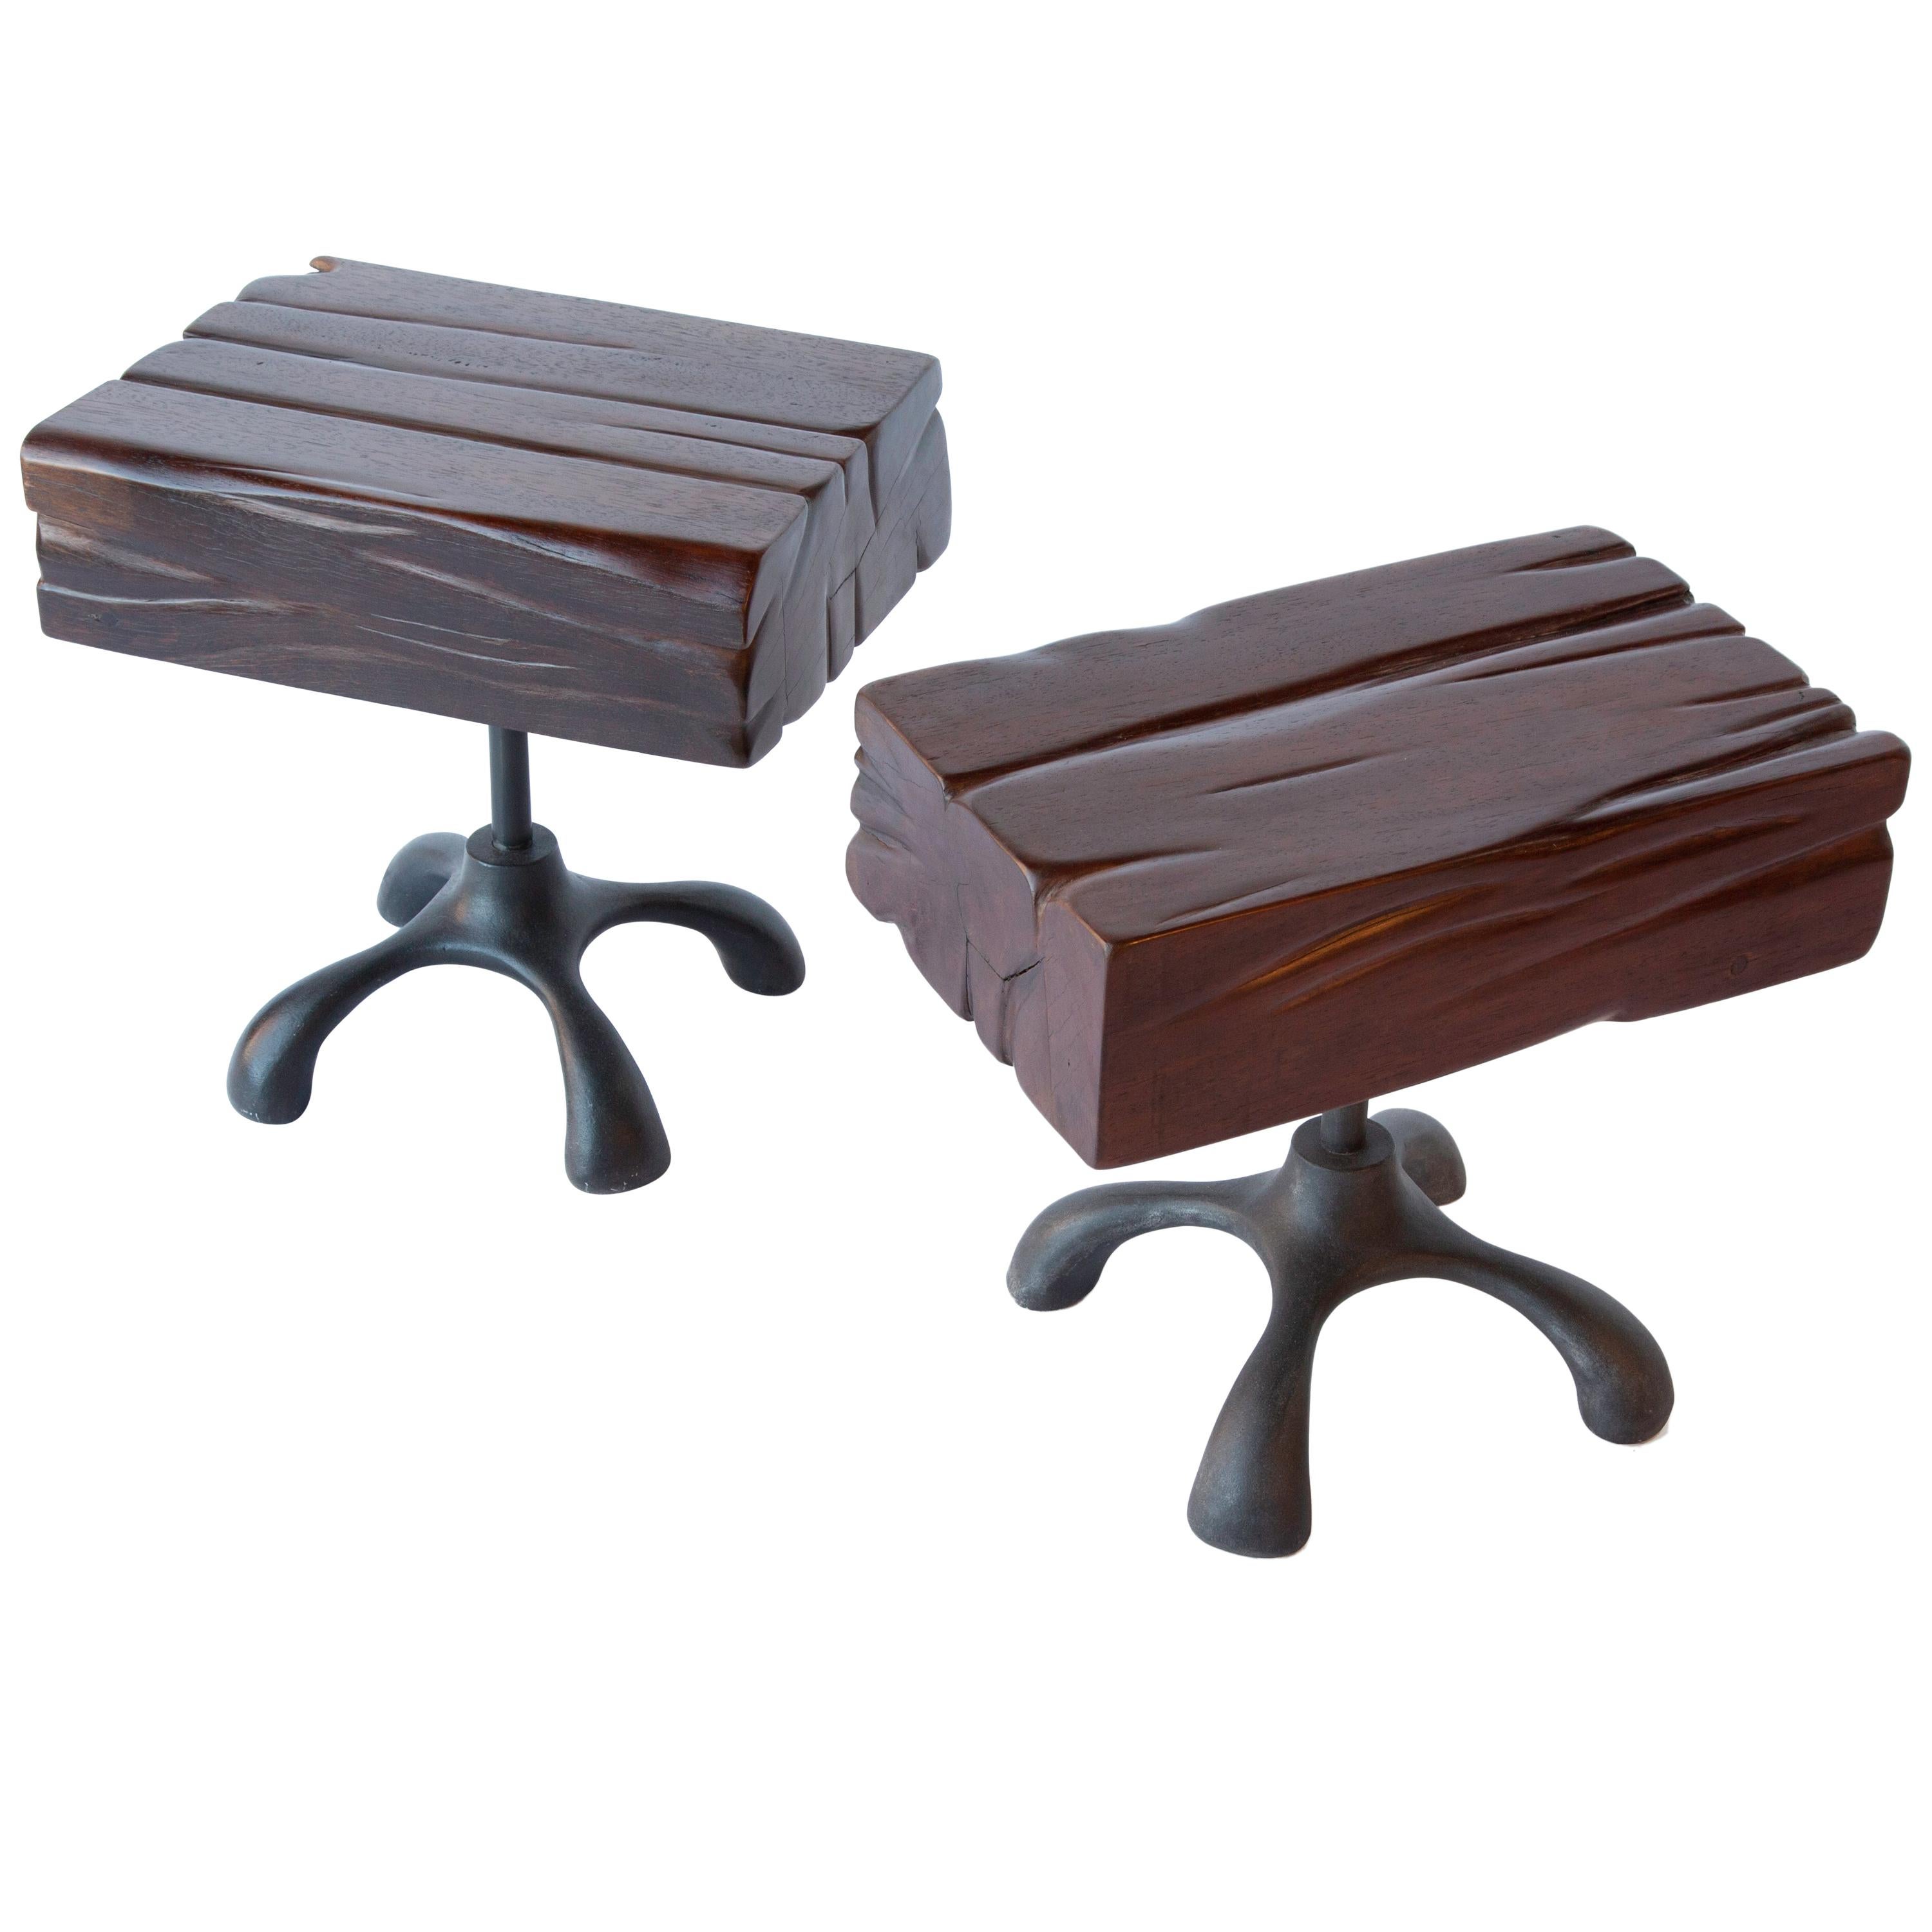 2 Twig Chunk Tables, Hand Carved Ironwood, Cast Aluminum, Jordan Mozer, USA 2017 For Sale